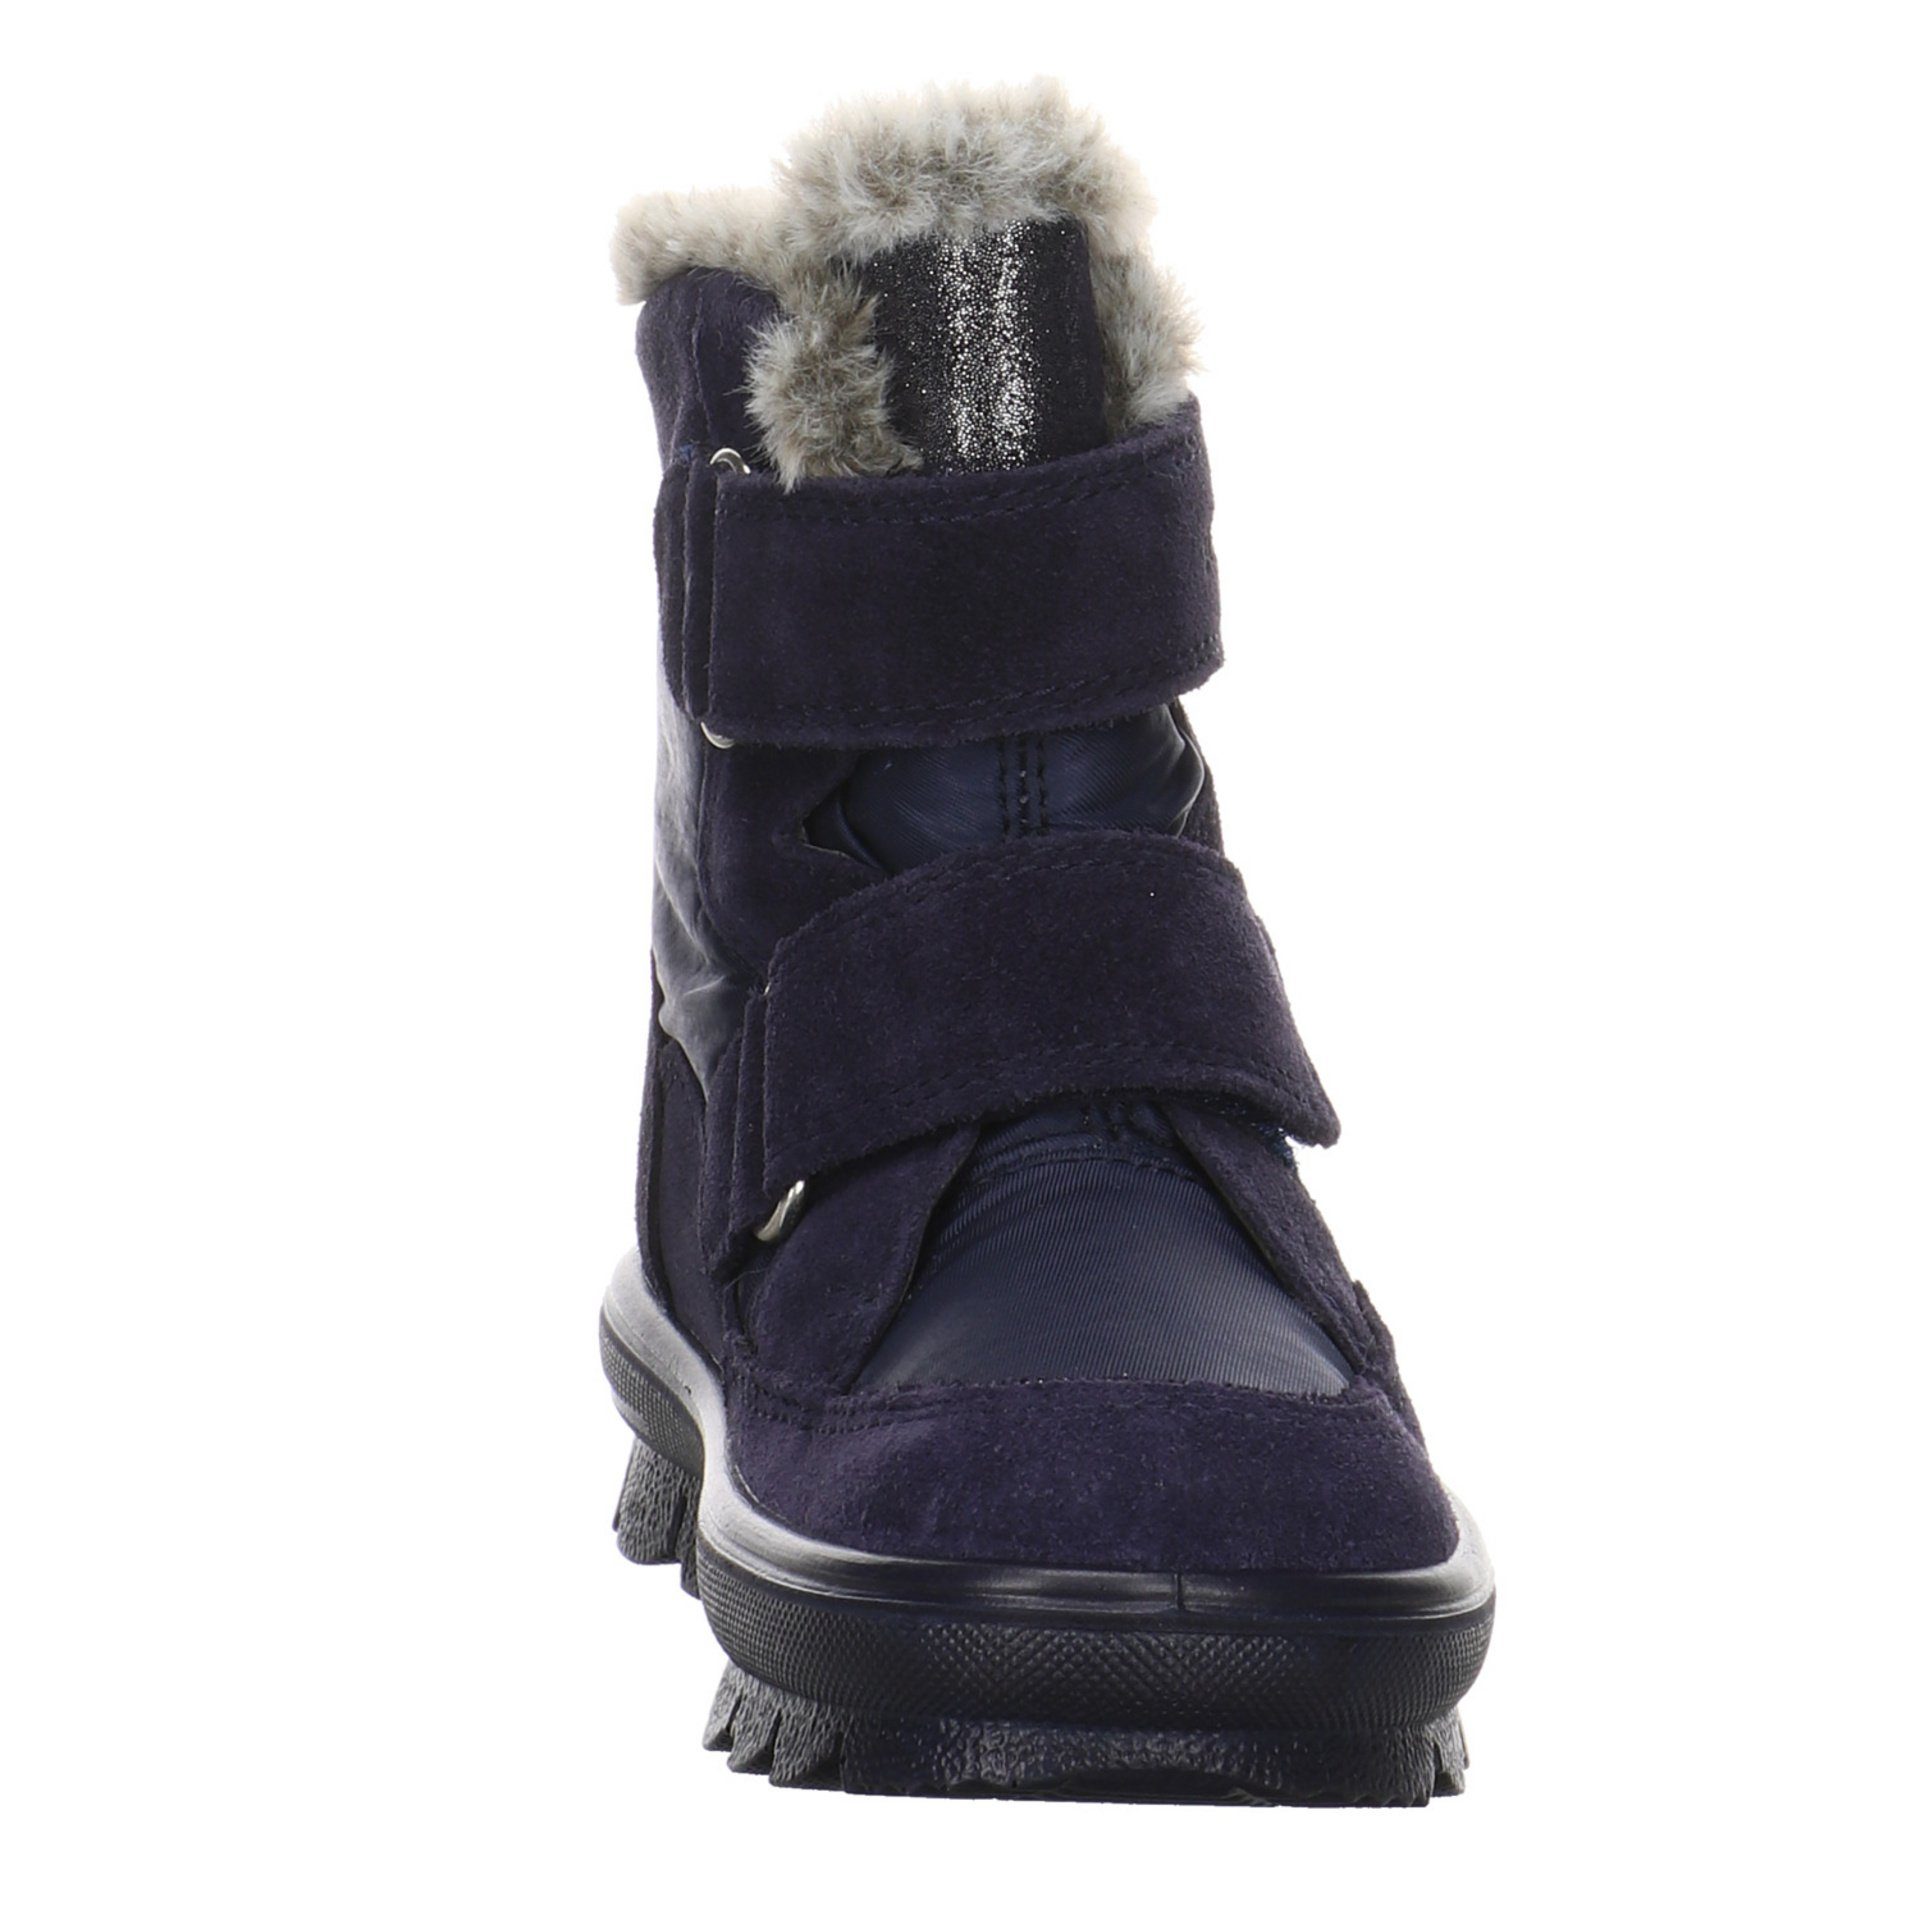 Superfit Flavia Boots Leder-/Textilkombination Winterboots uni blau Leder-/Textilkombination